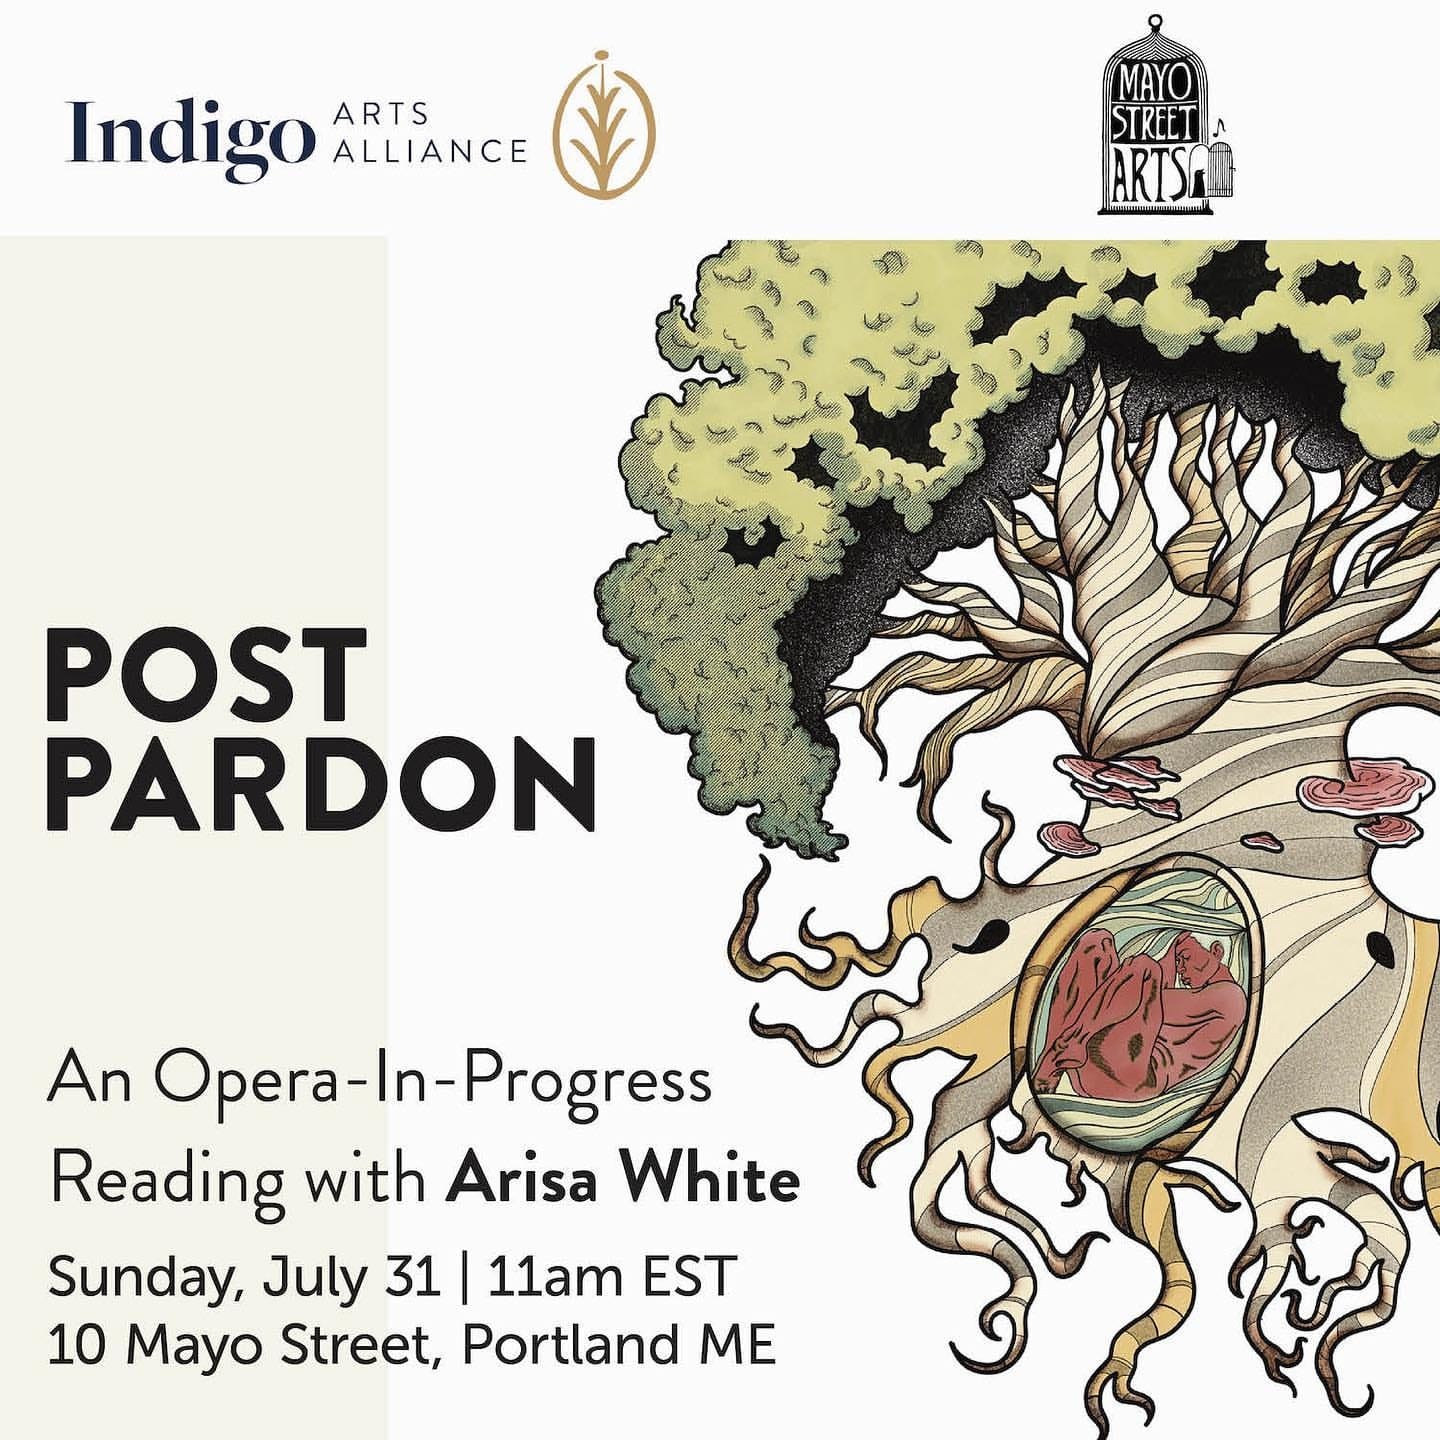 Sun, Jul 31; 11am | Post Pardon: Opera-In-Progress Reading